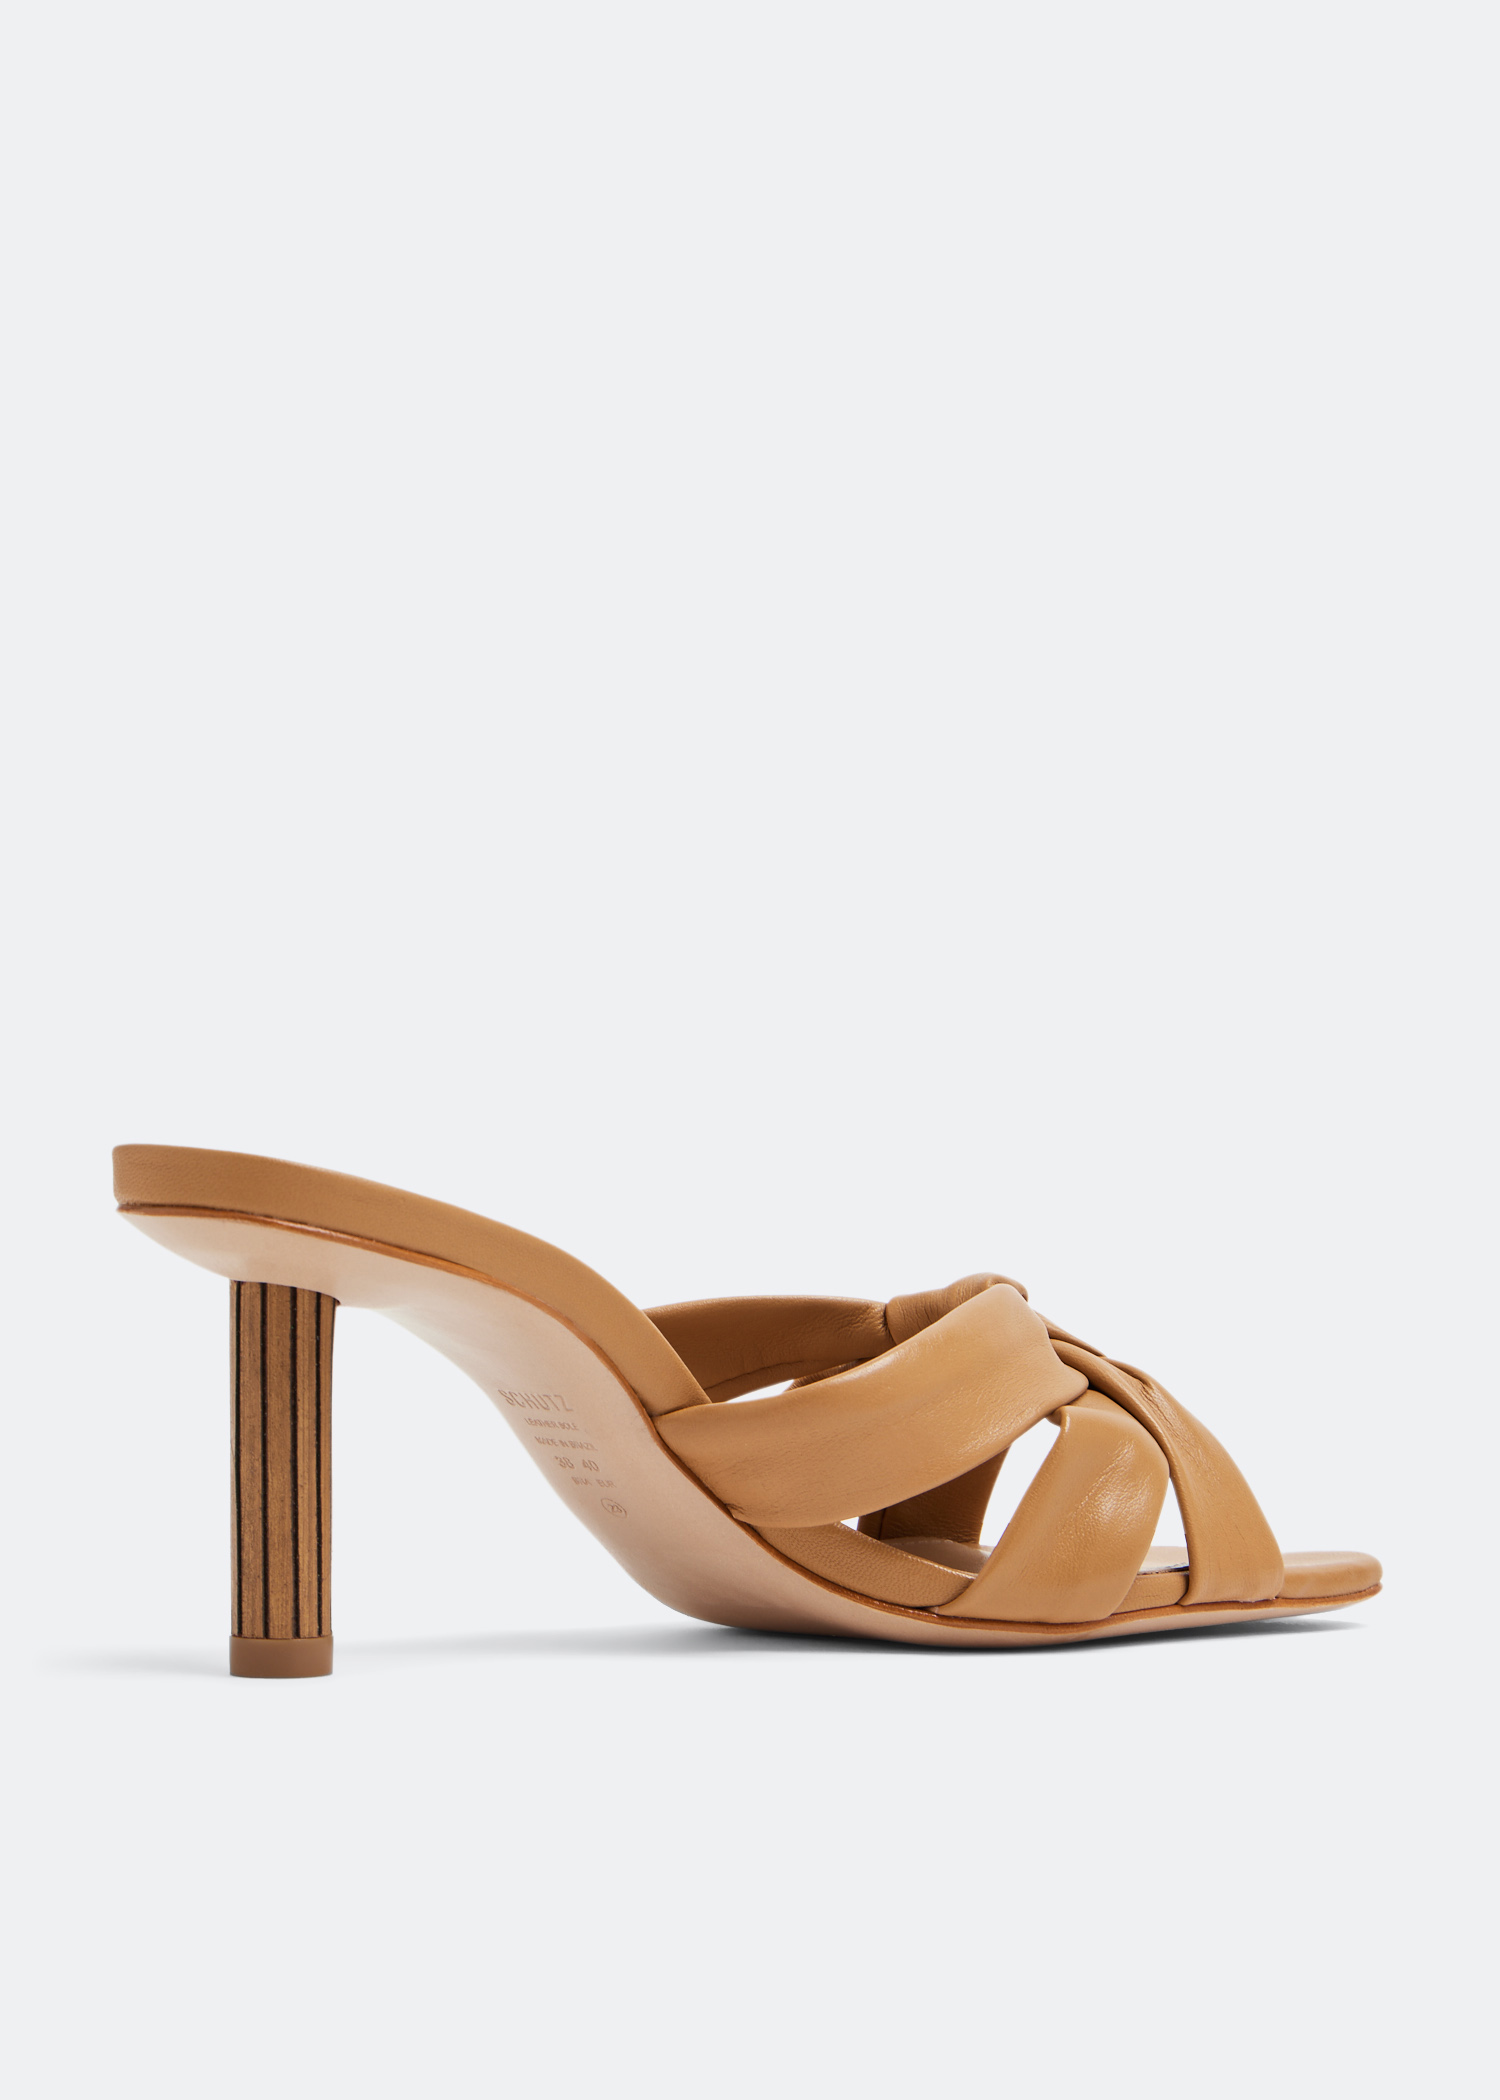 Schutz Mindy Pin heel mules for Women - Brown in KSA | Level Shoes